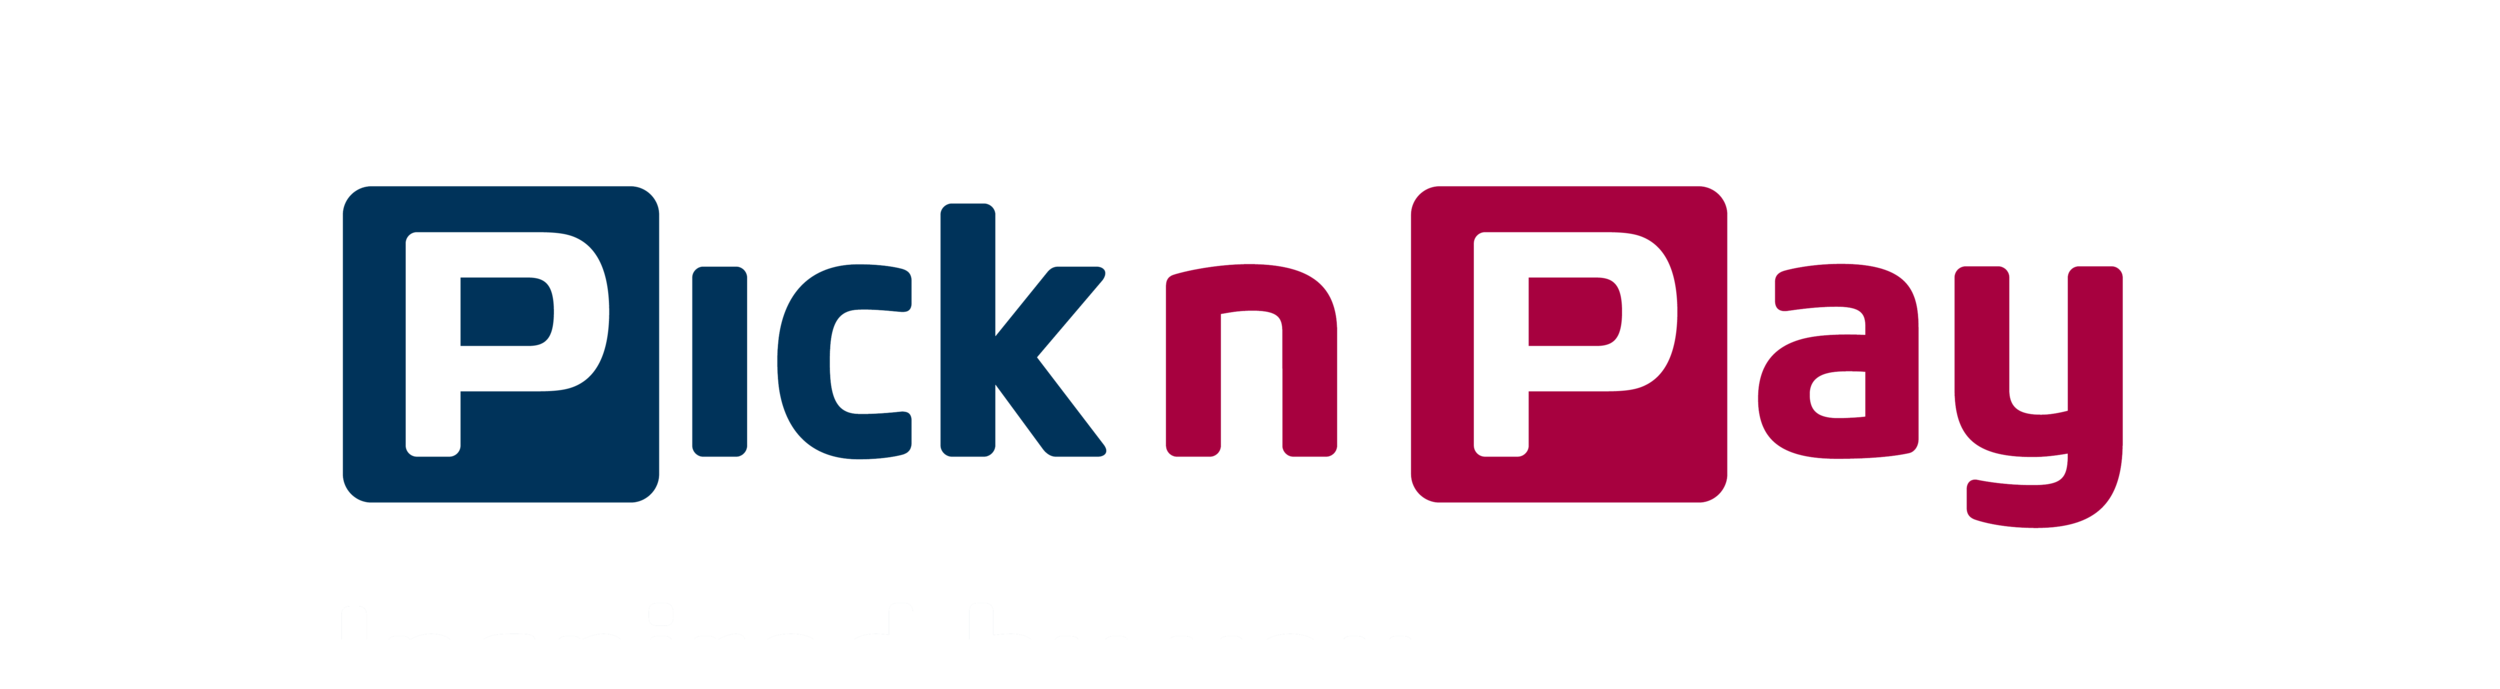 Pick-n-Pay-logo.png